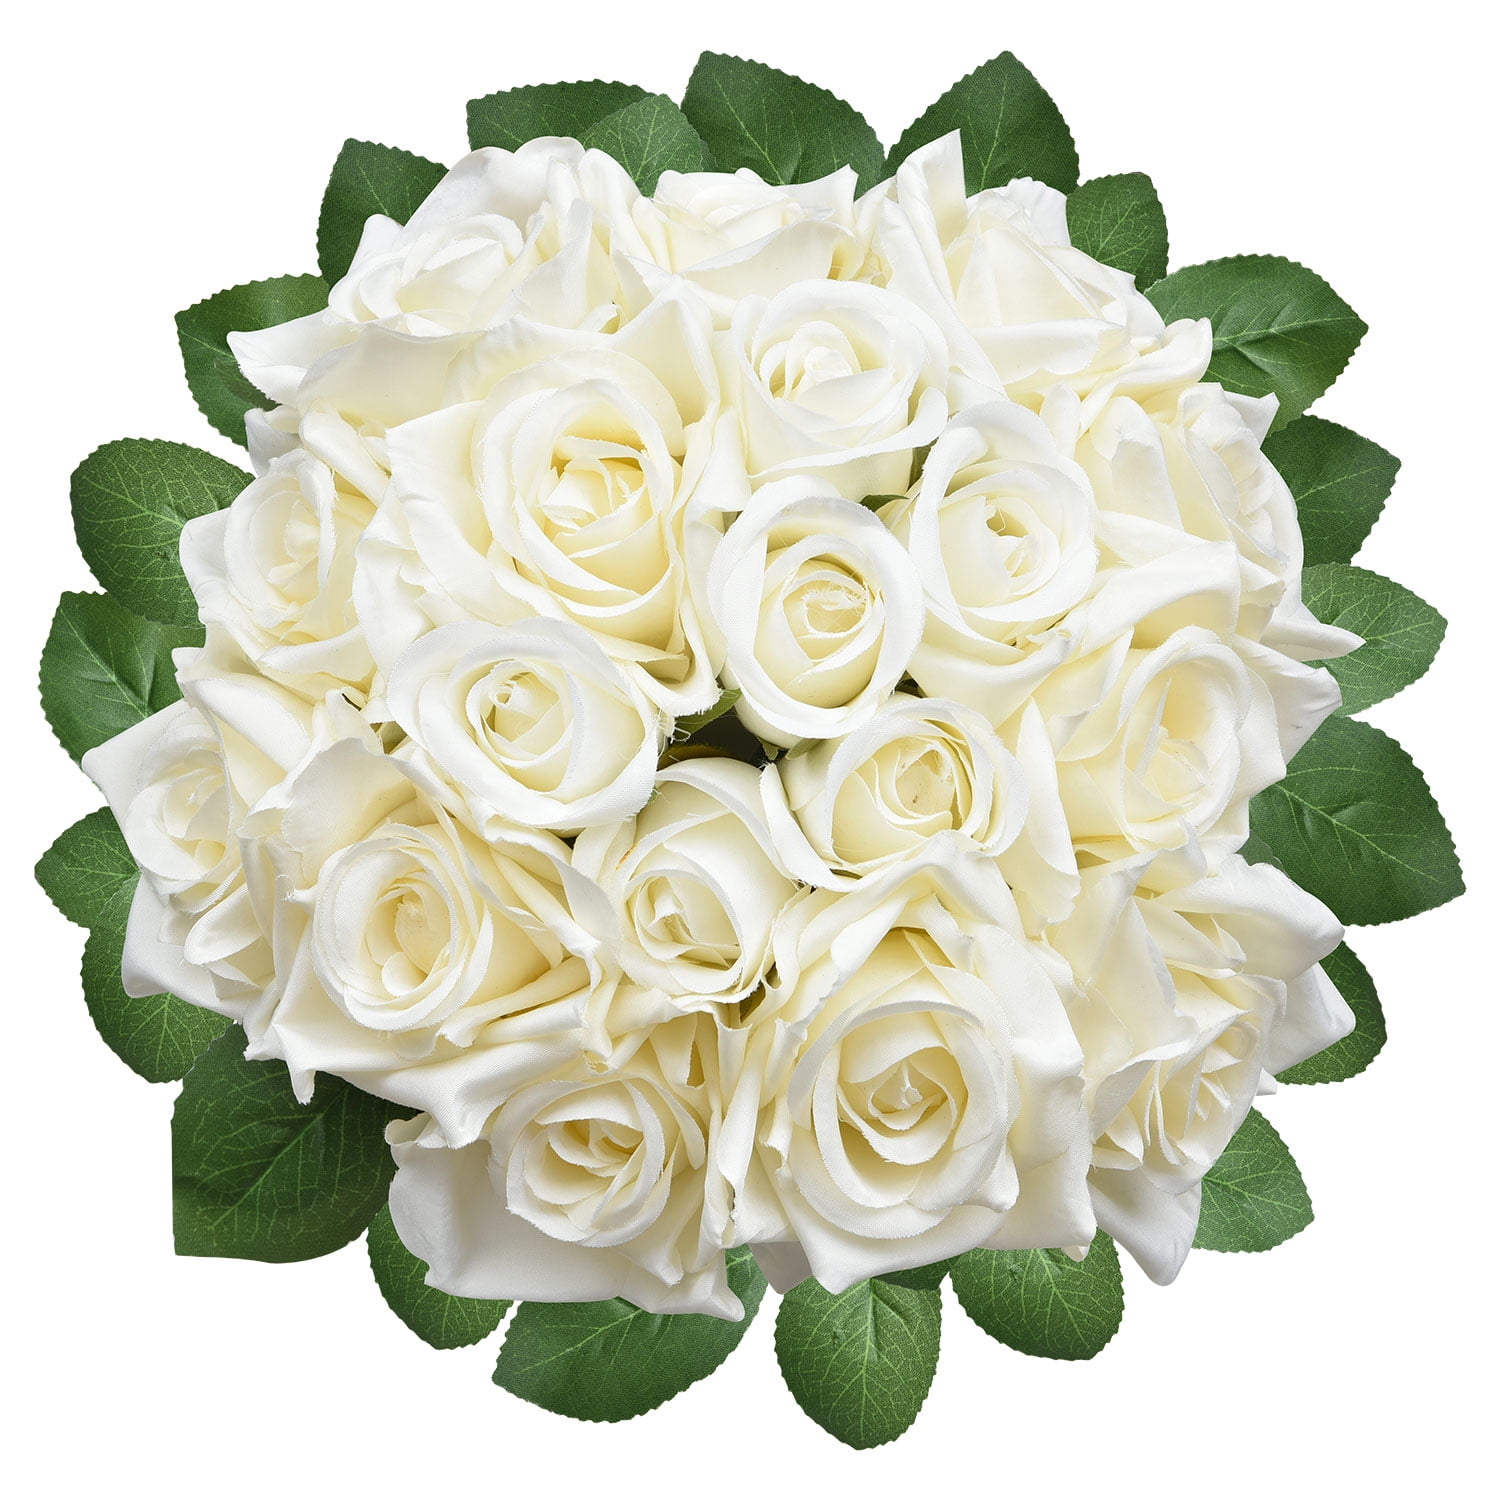 Artificial Fake Rose Silk Flower Wedding Party Bridal Bouquet Office Home Decor 